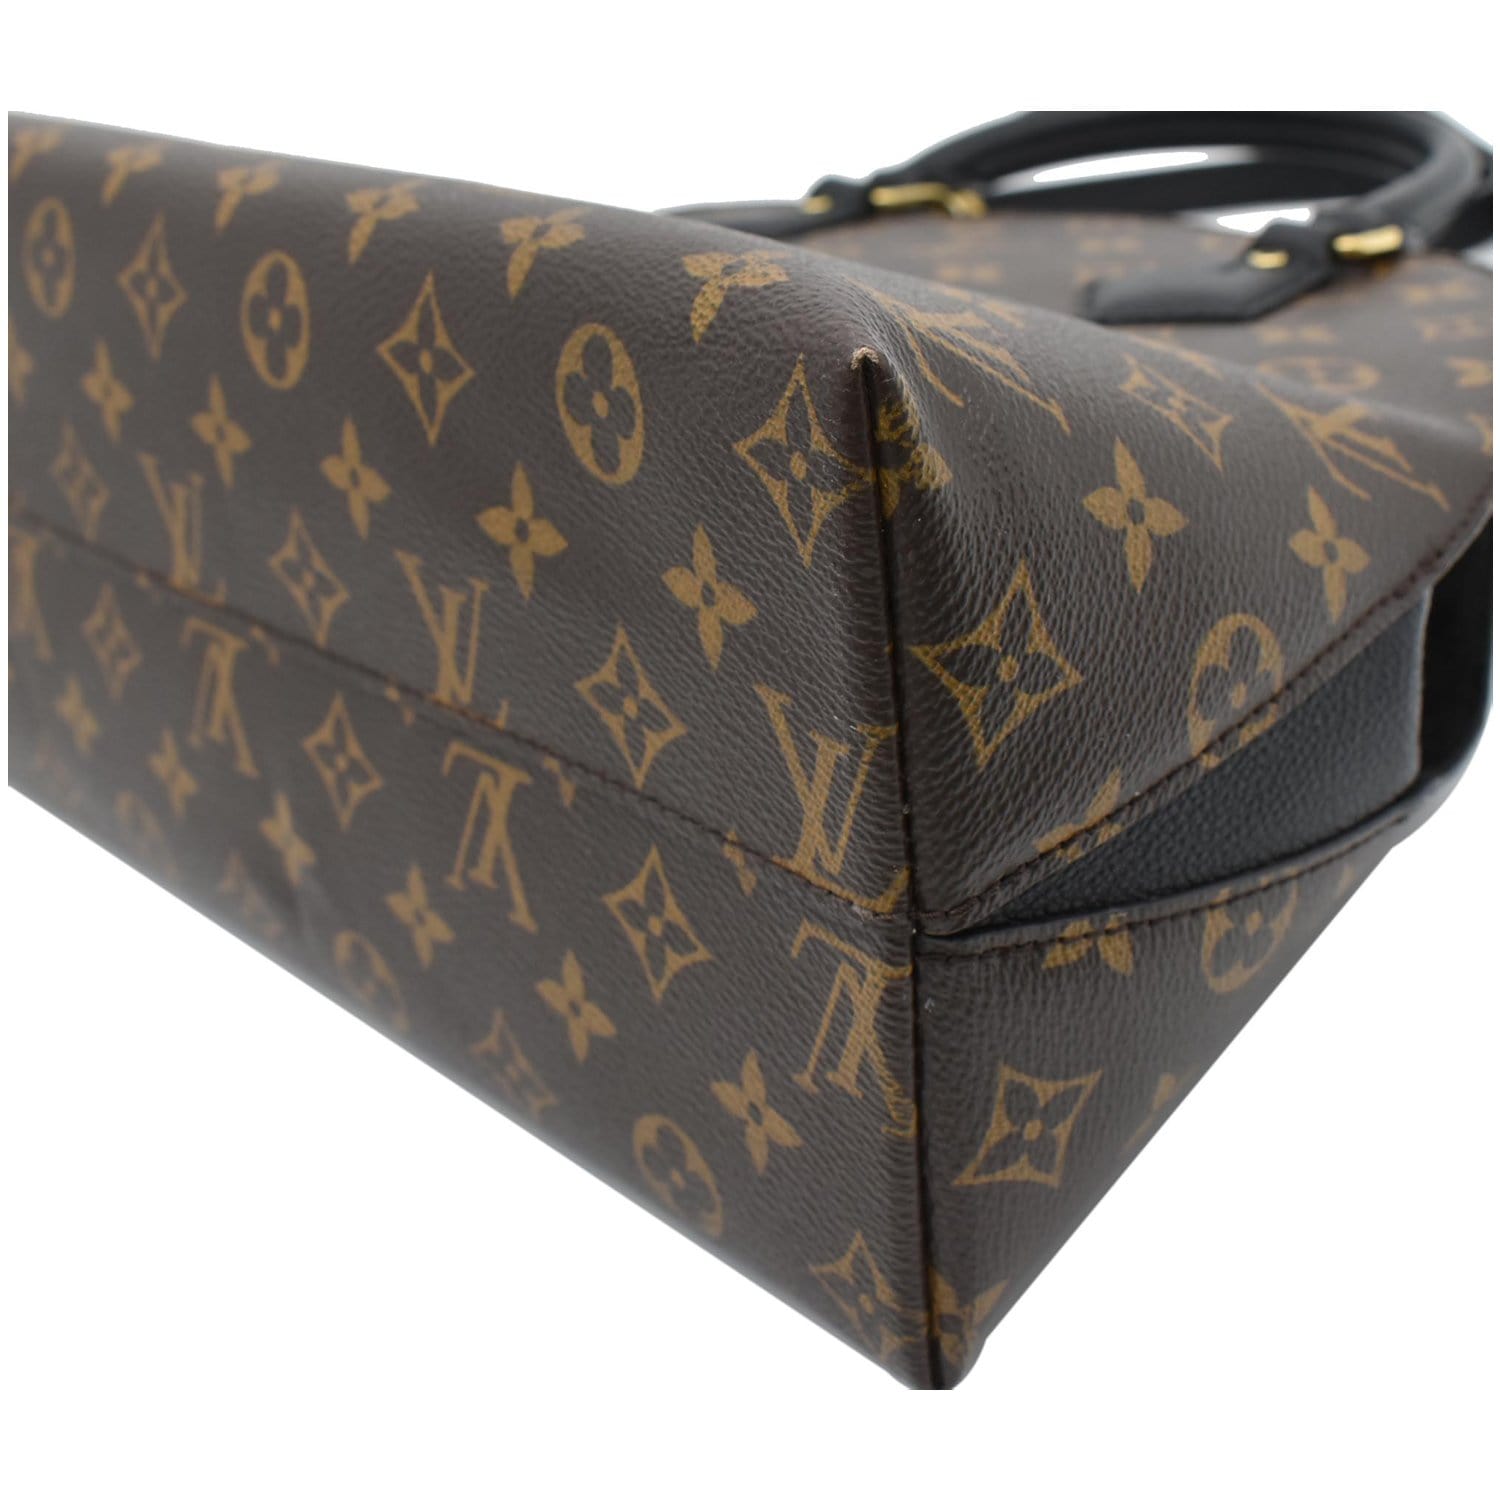 Louis Vuitton Alma B'N'B Monogram Canvas Shoulder Bag